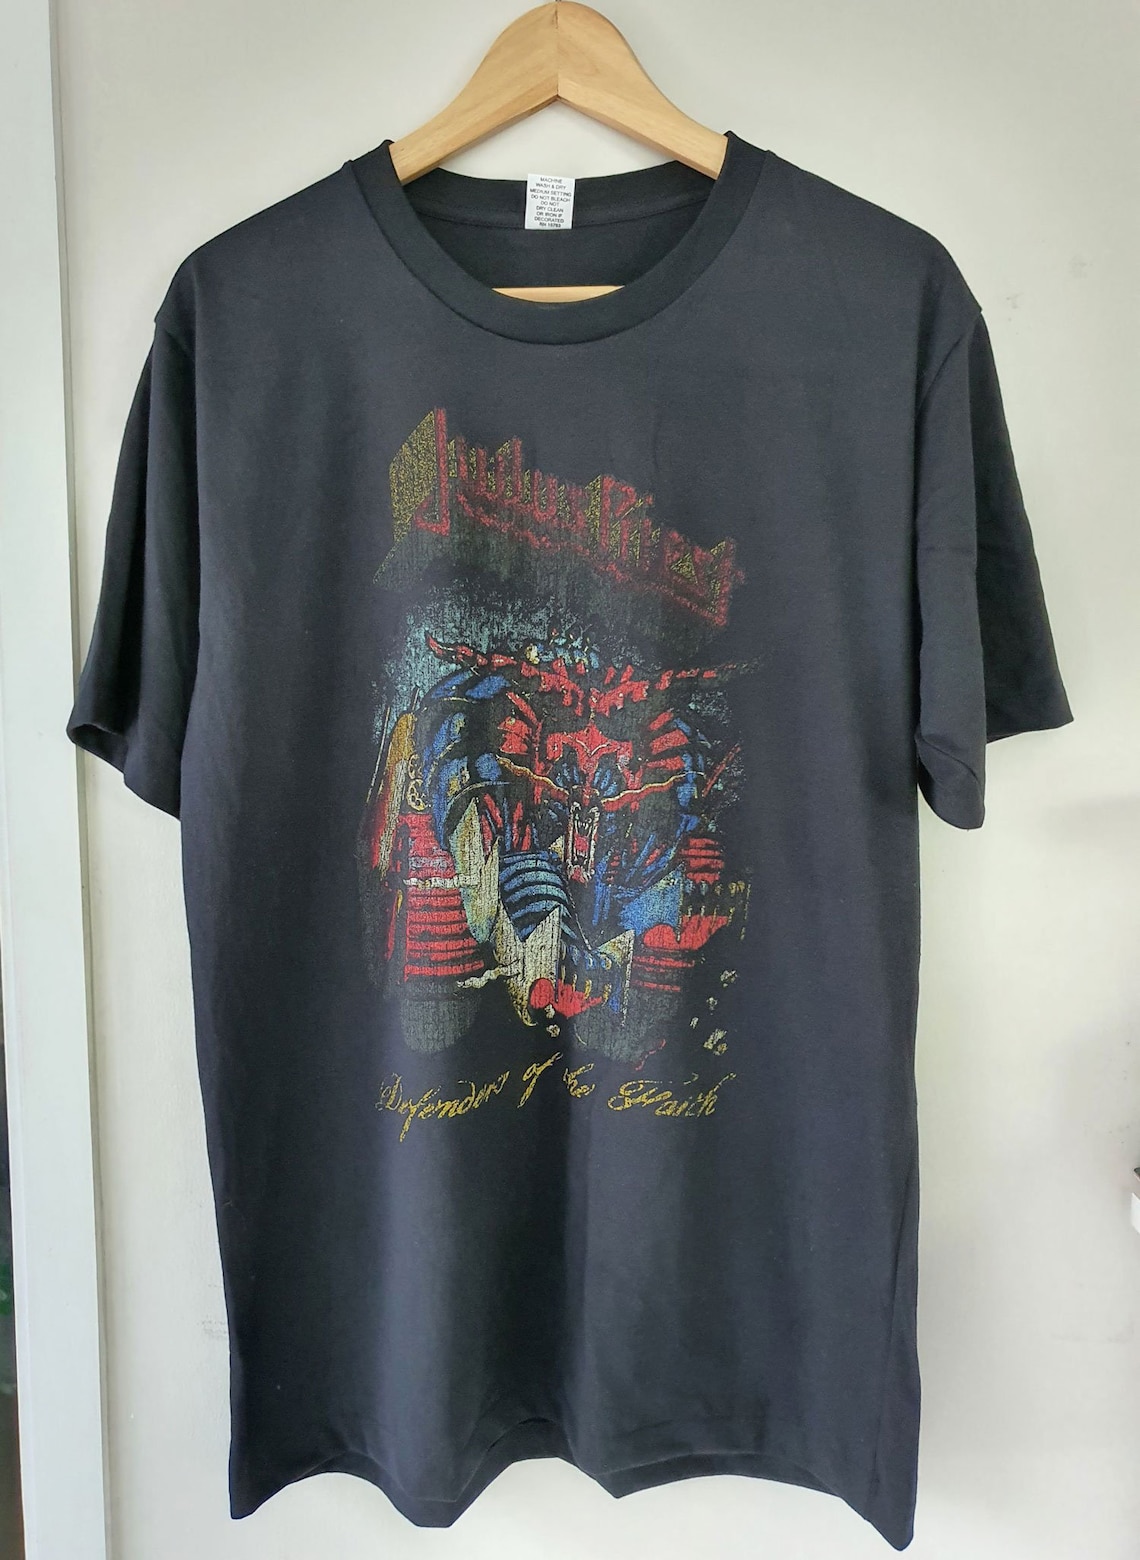 Judas Priest T-shirt Vintage Look Retro T-shirt L Size | Etsy